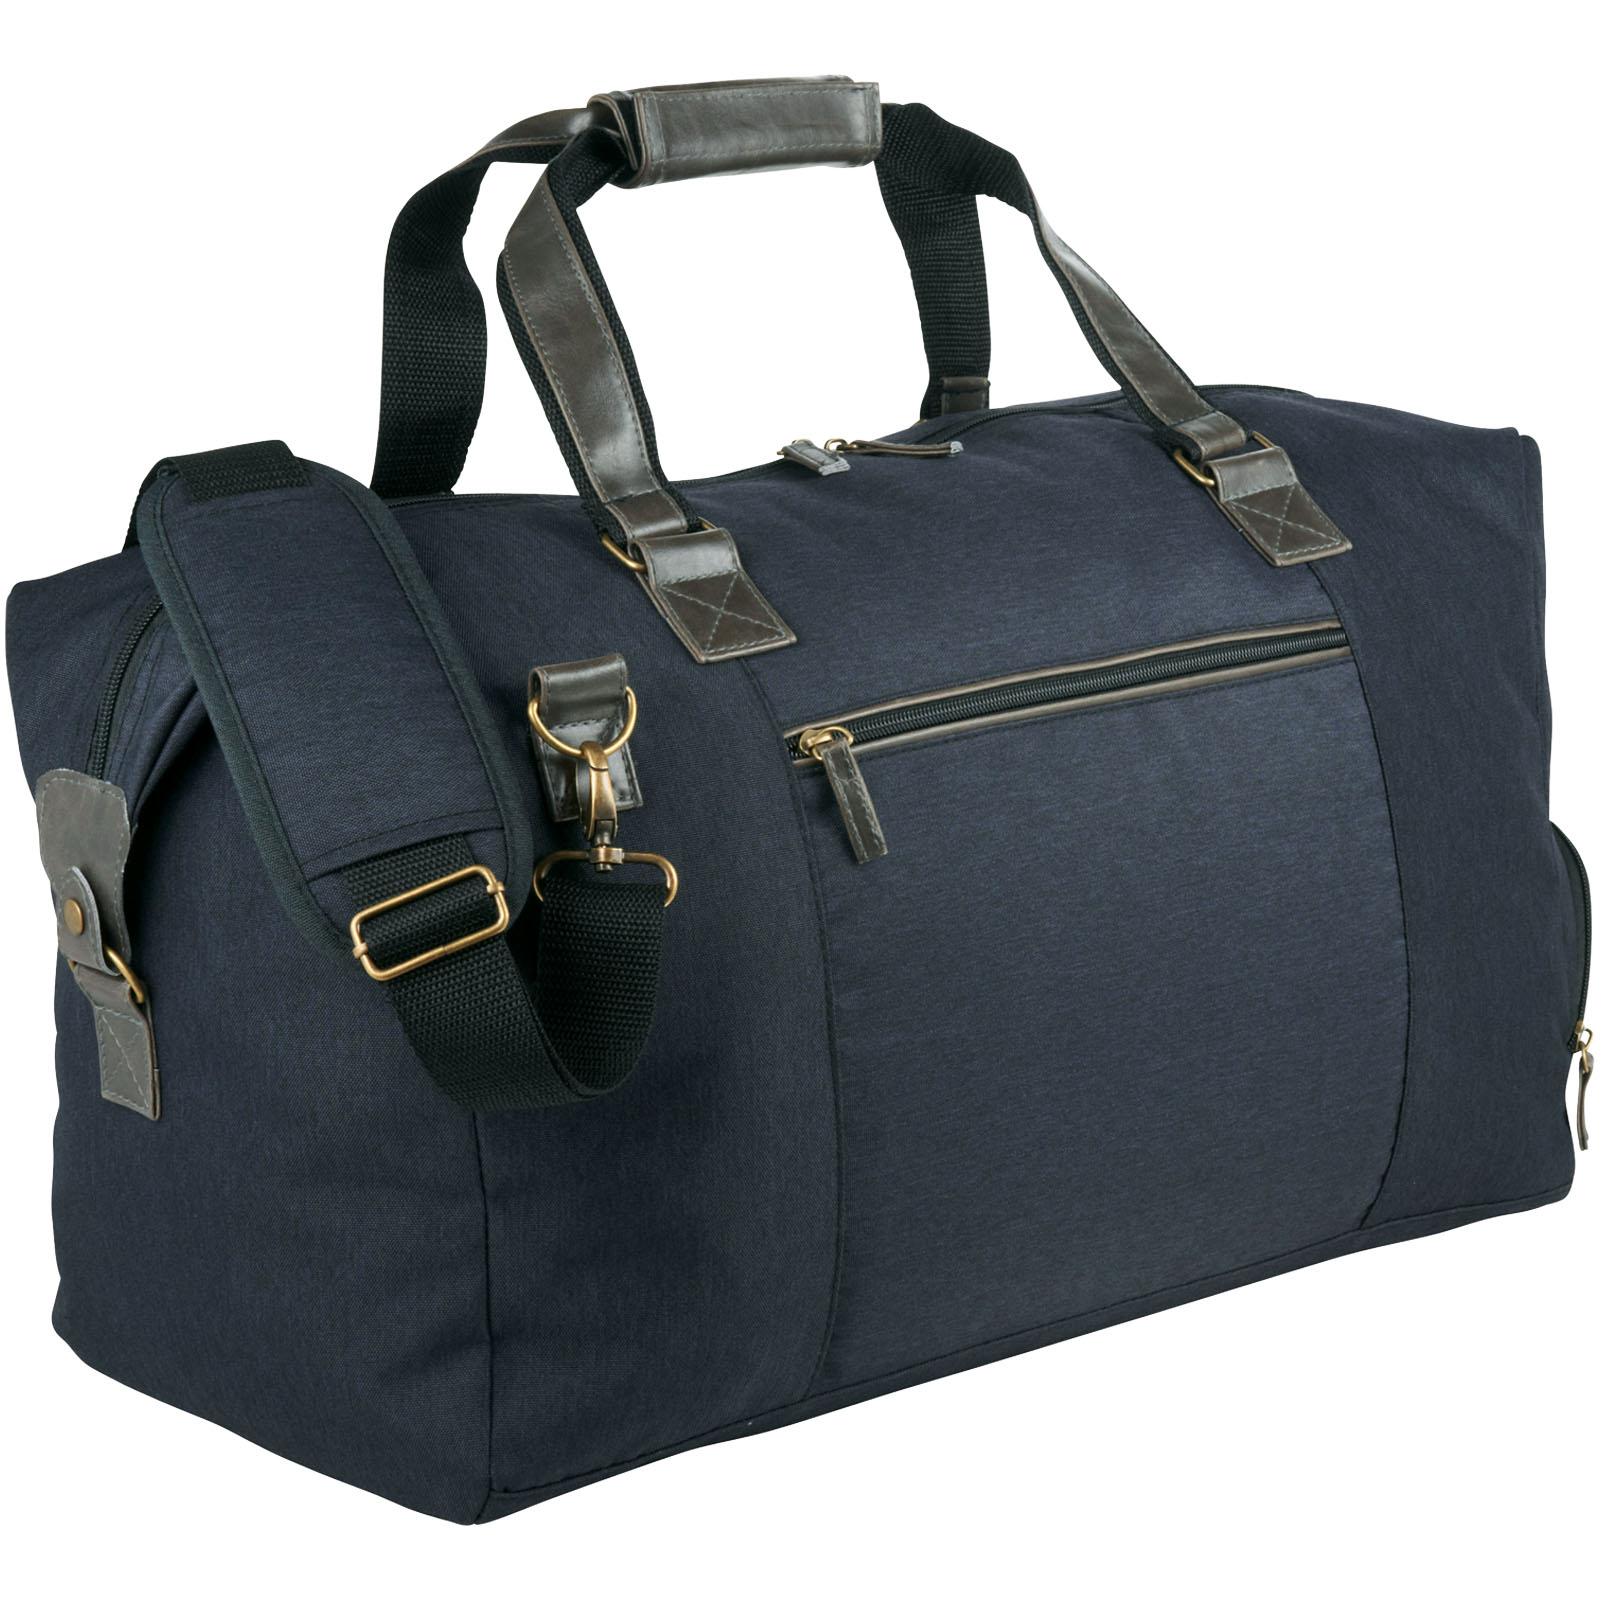 Travel bags - Capitol duffel bag 35L